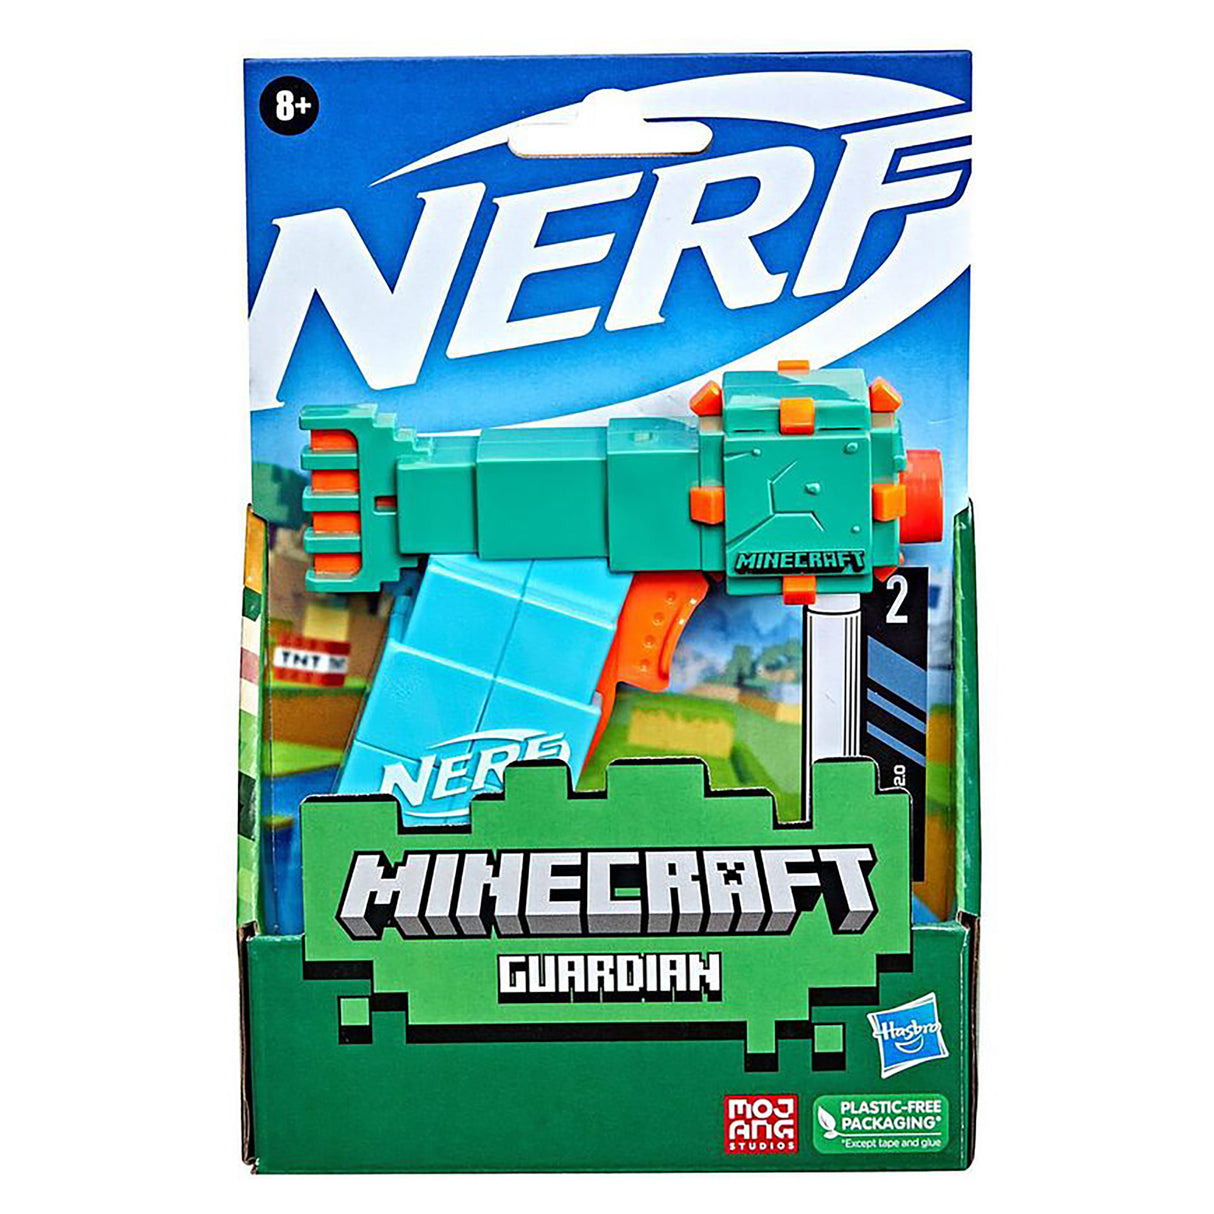 Nerf Ner Ms Minecraft Guardian